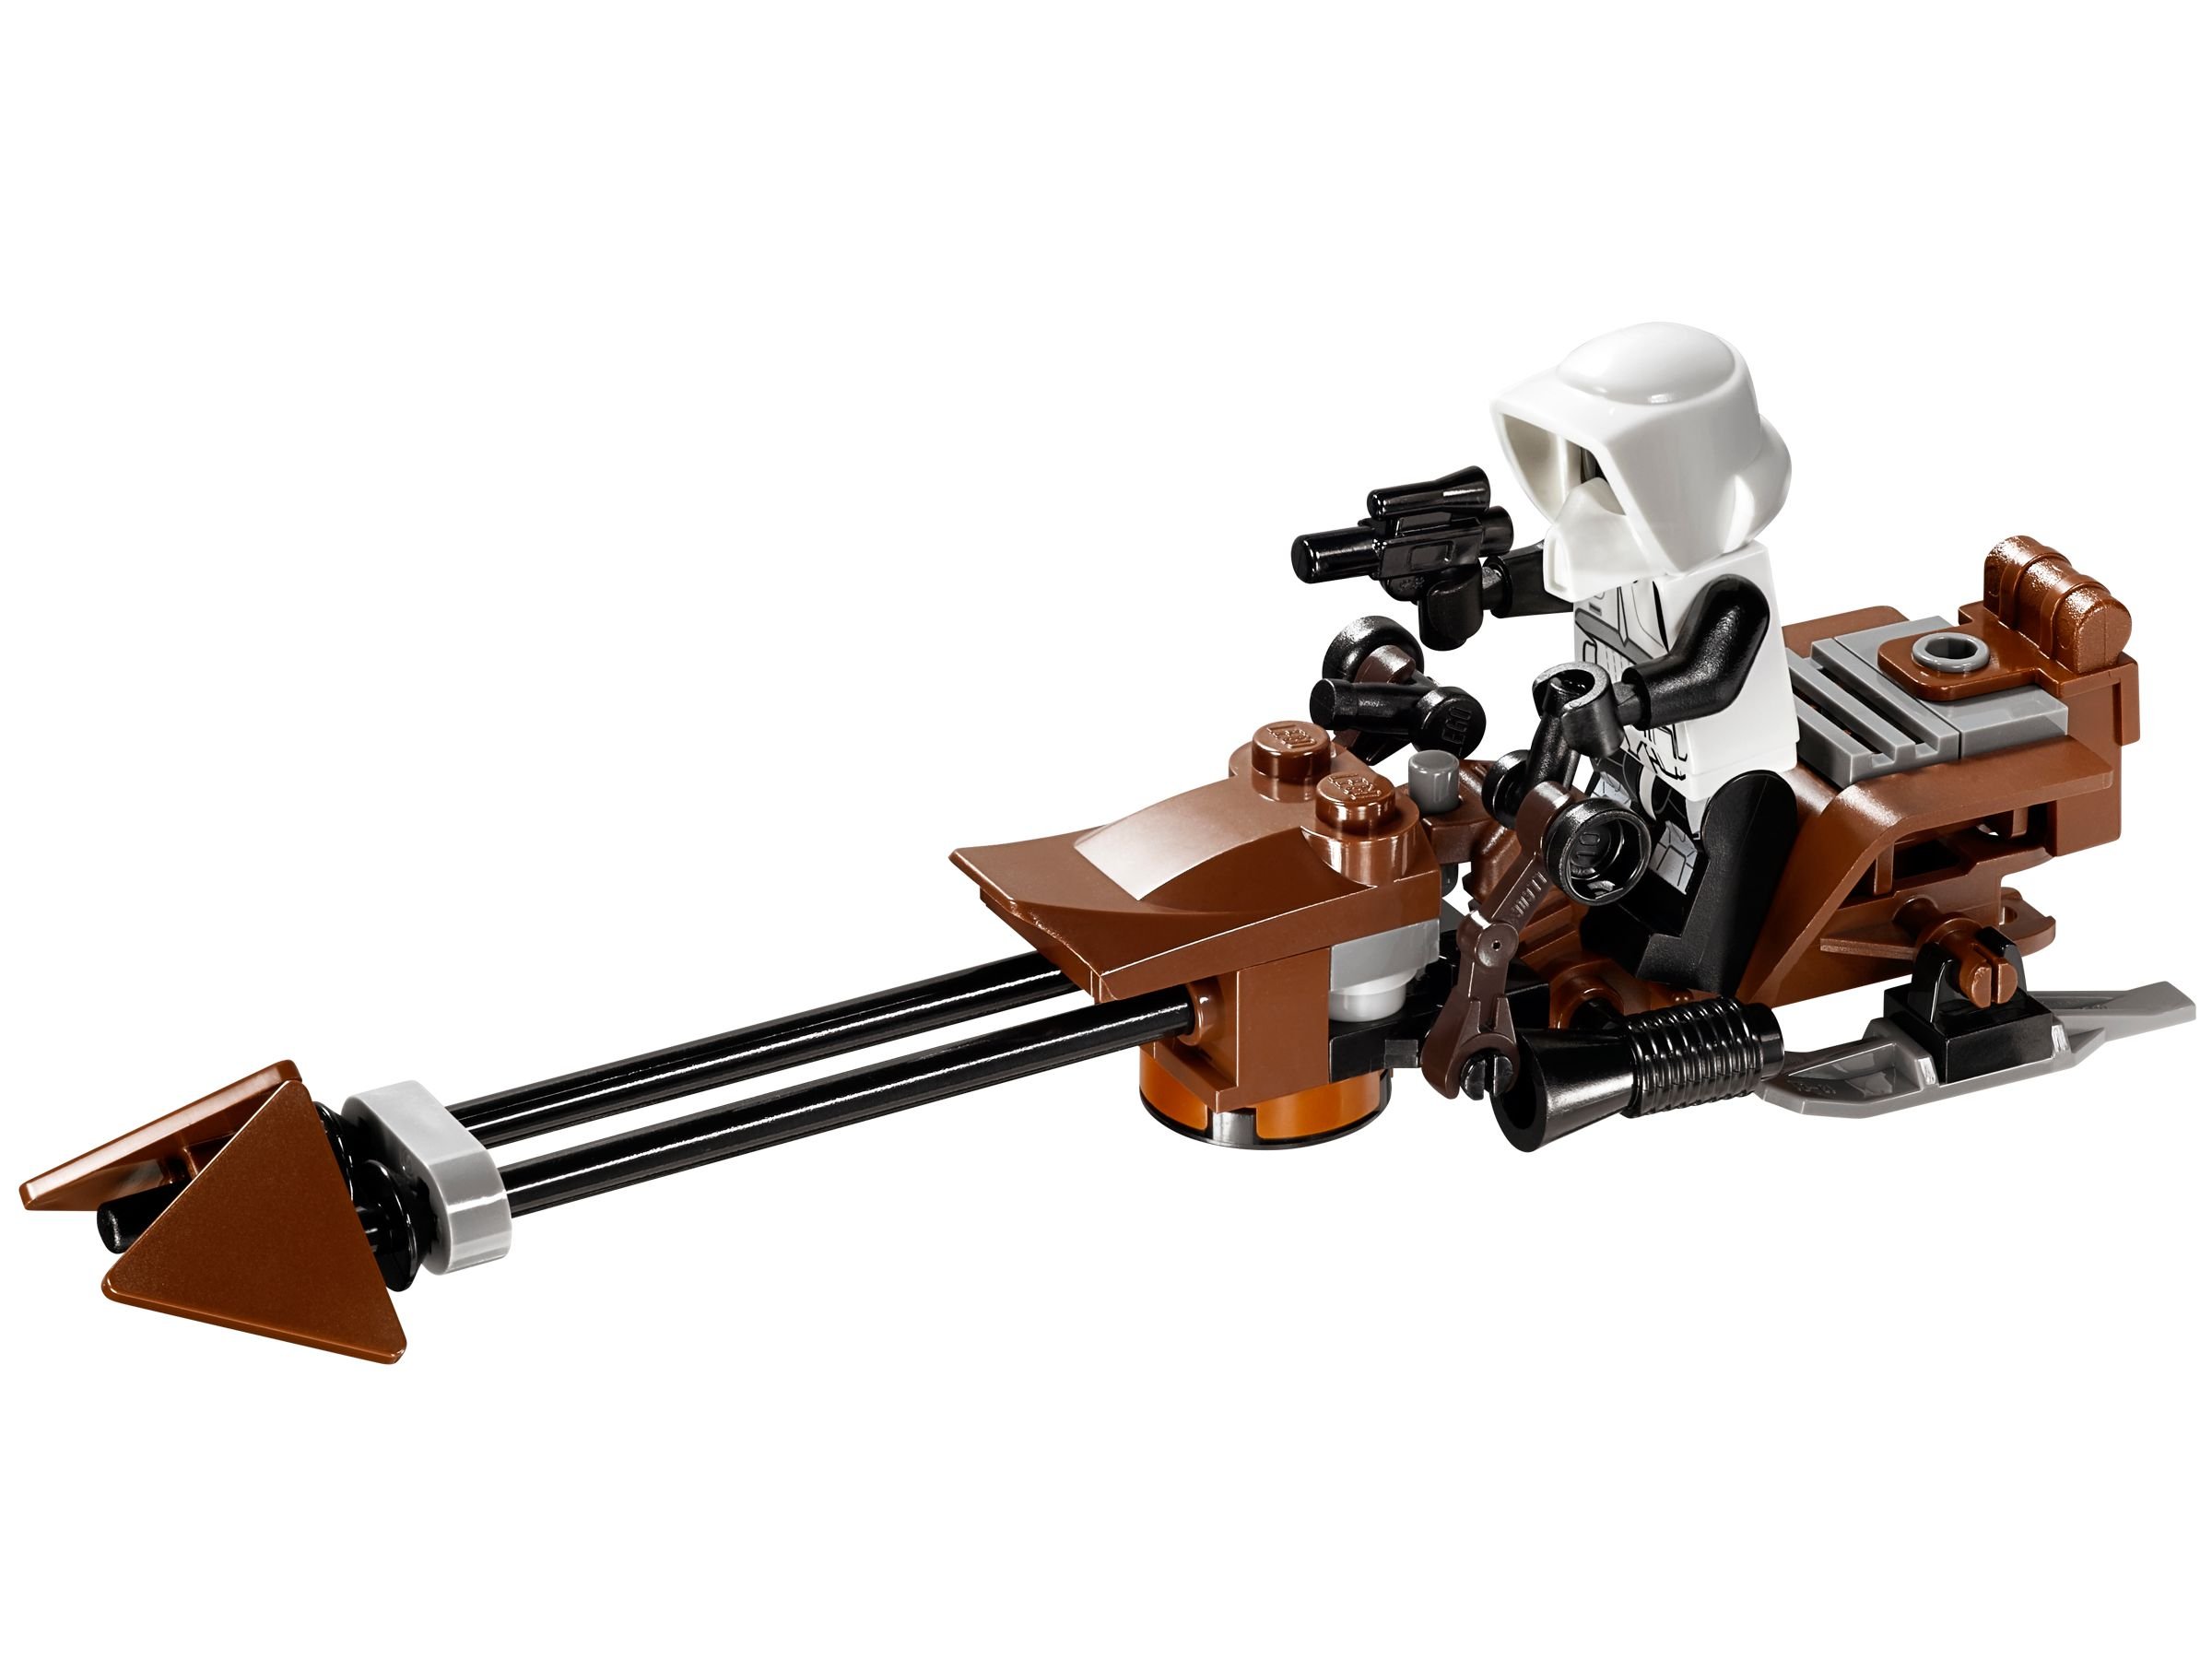 LEGO Star Wars 10236 Ewok™ Village LEGO_10236_alt2.jpg